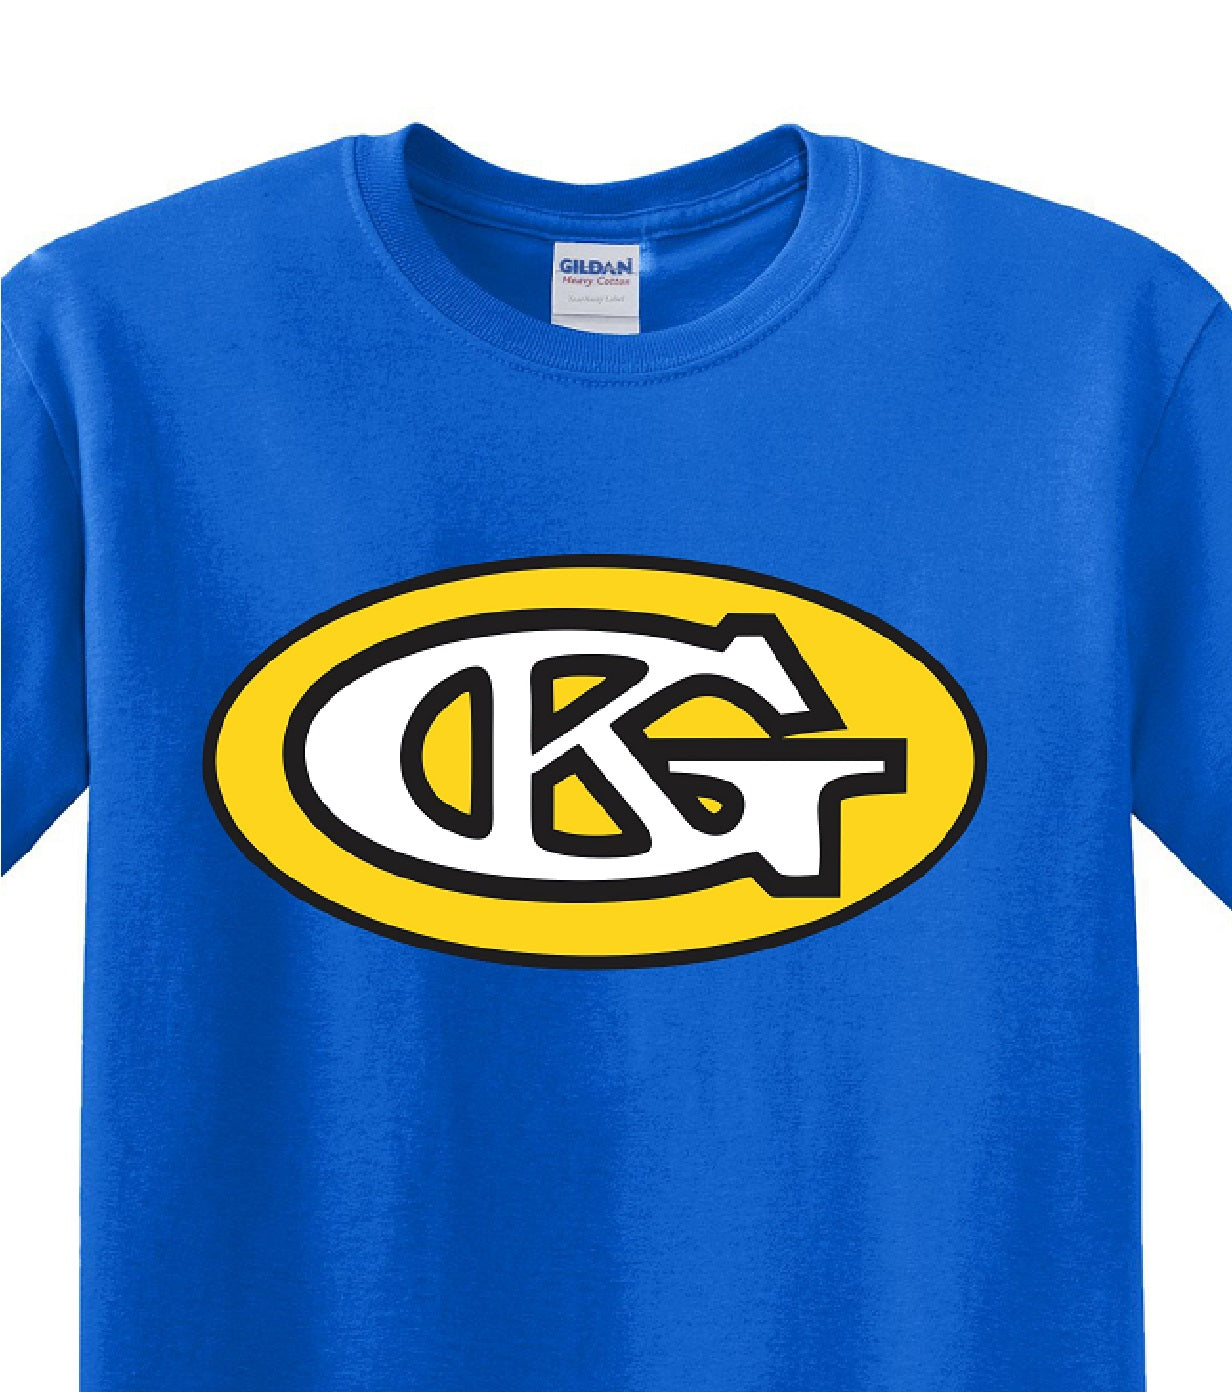 Skate Men's Shirt - CKG (Blue) - MYSTYLEMYCLOTHING